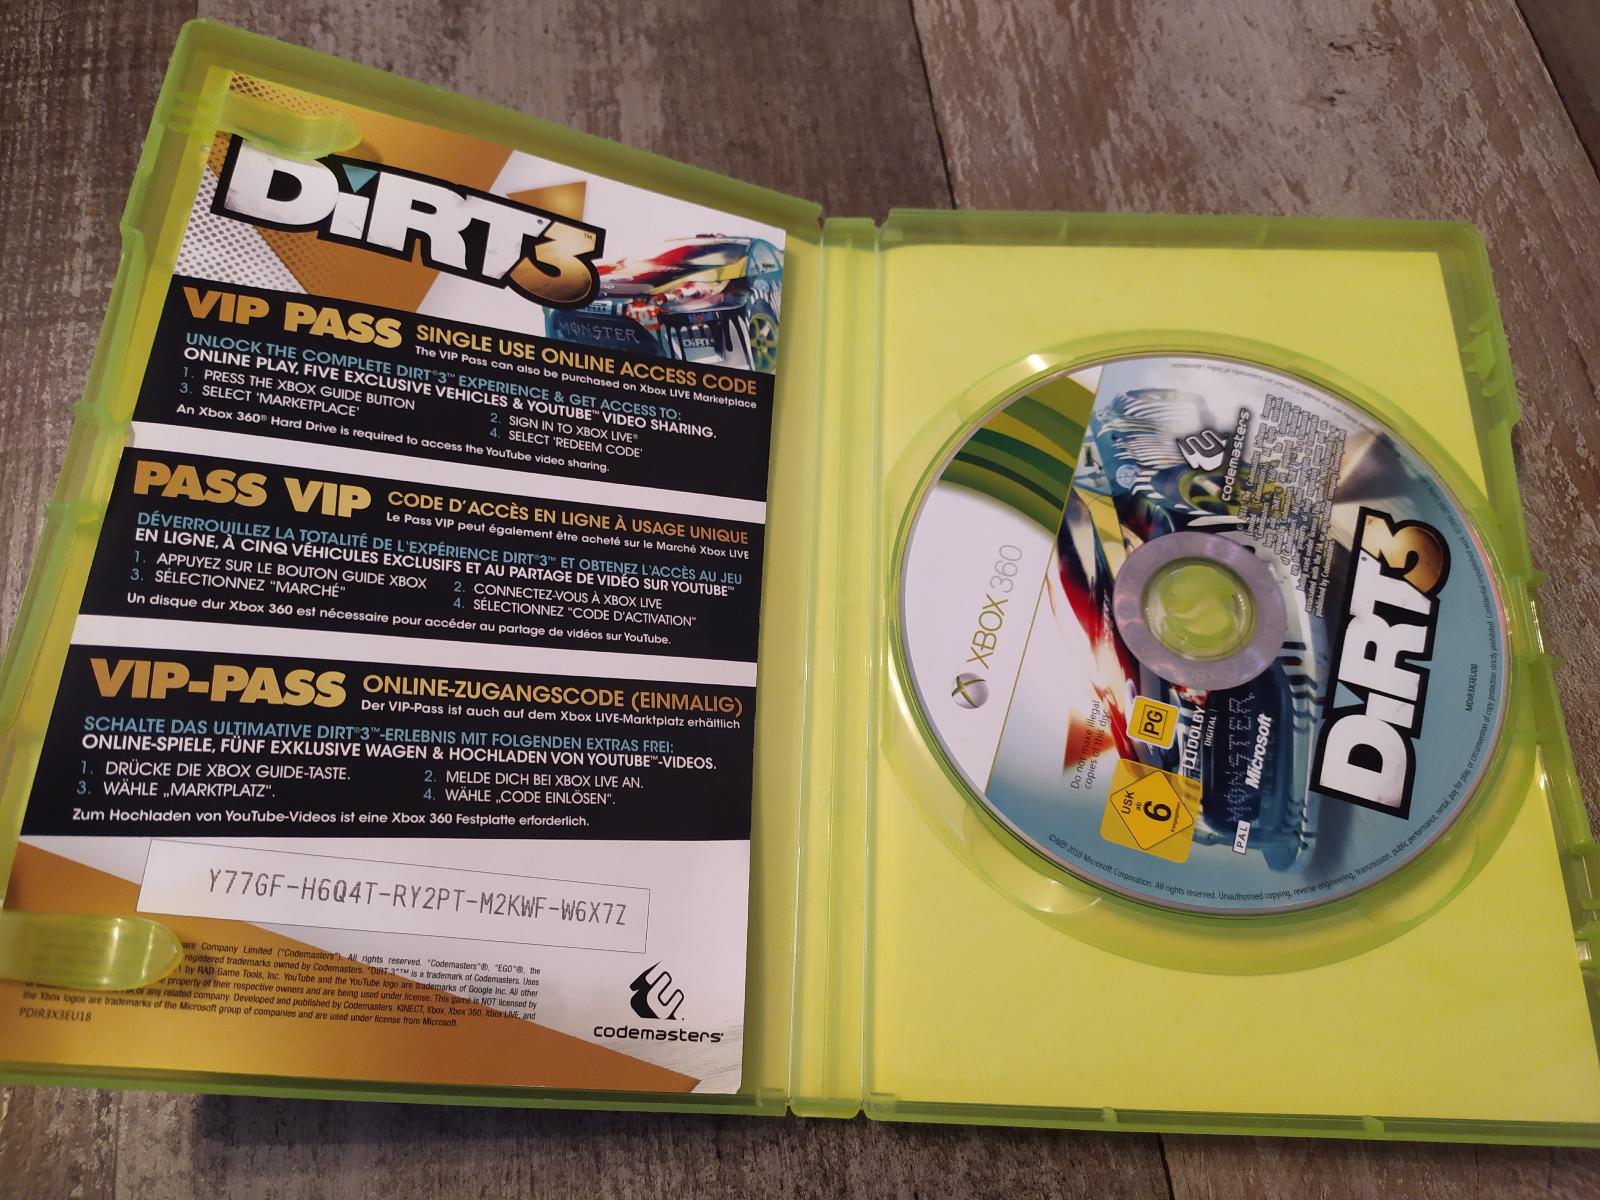 Xbox 360 Dirt 3 - Hry